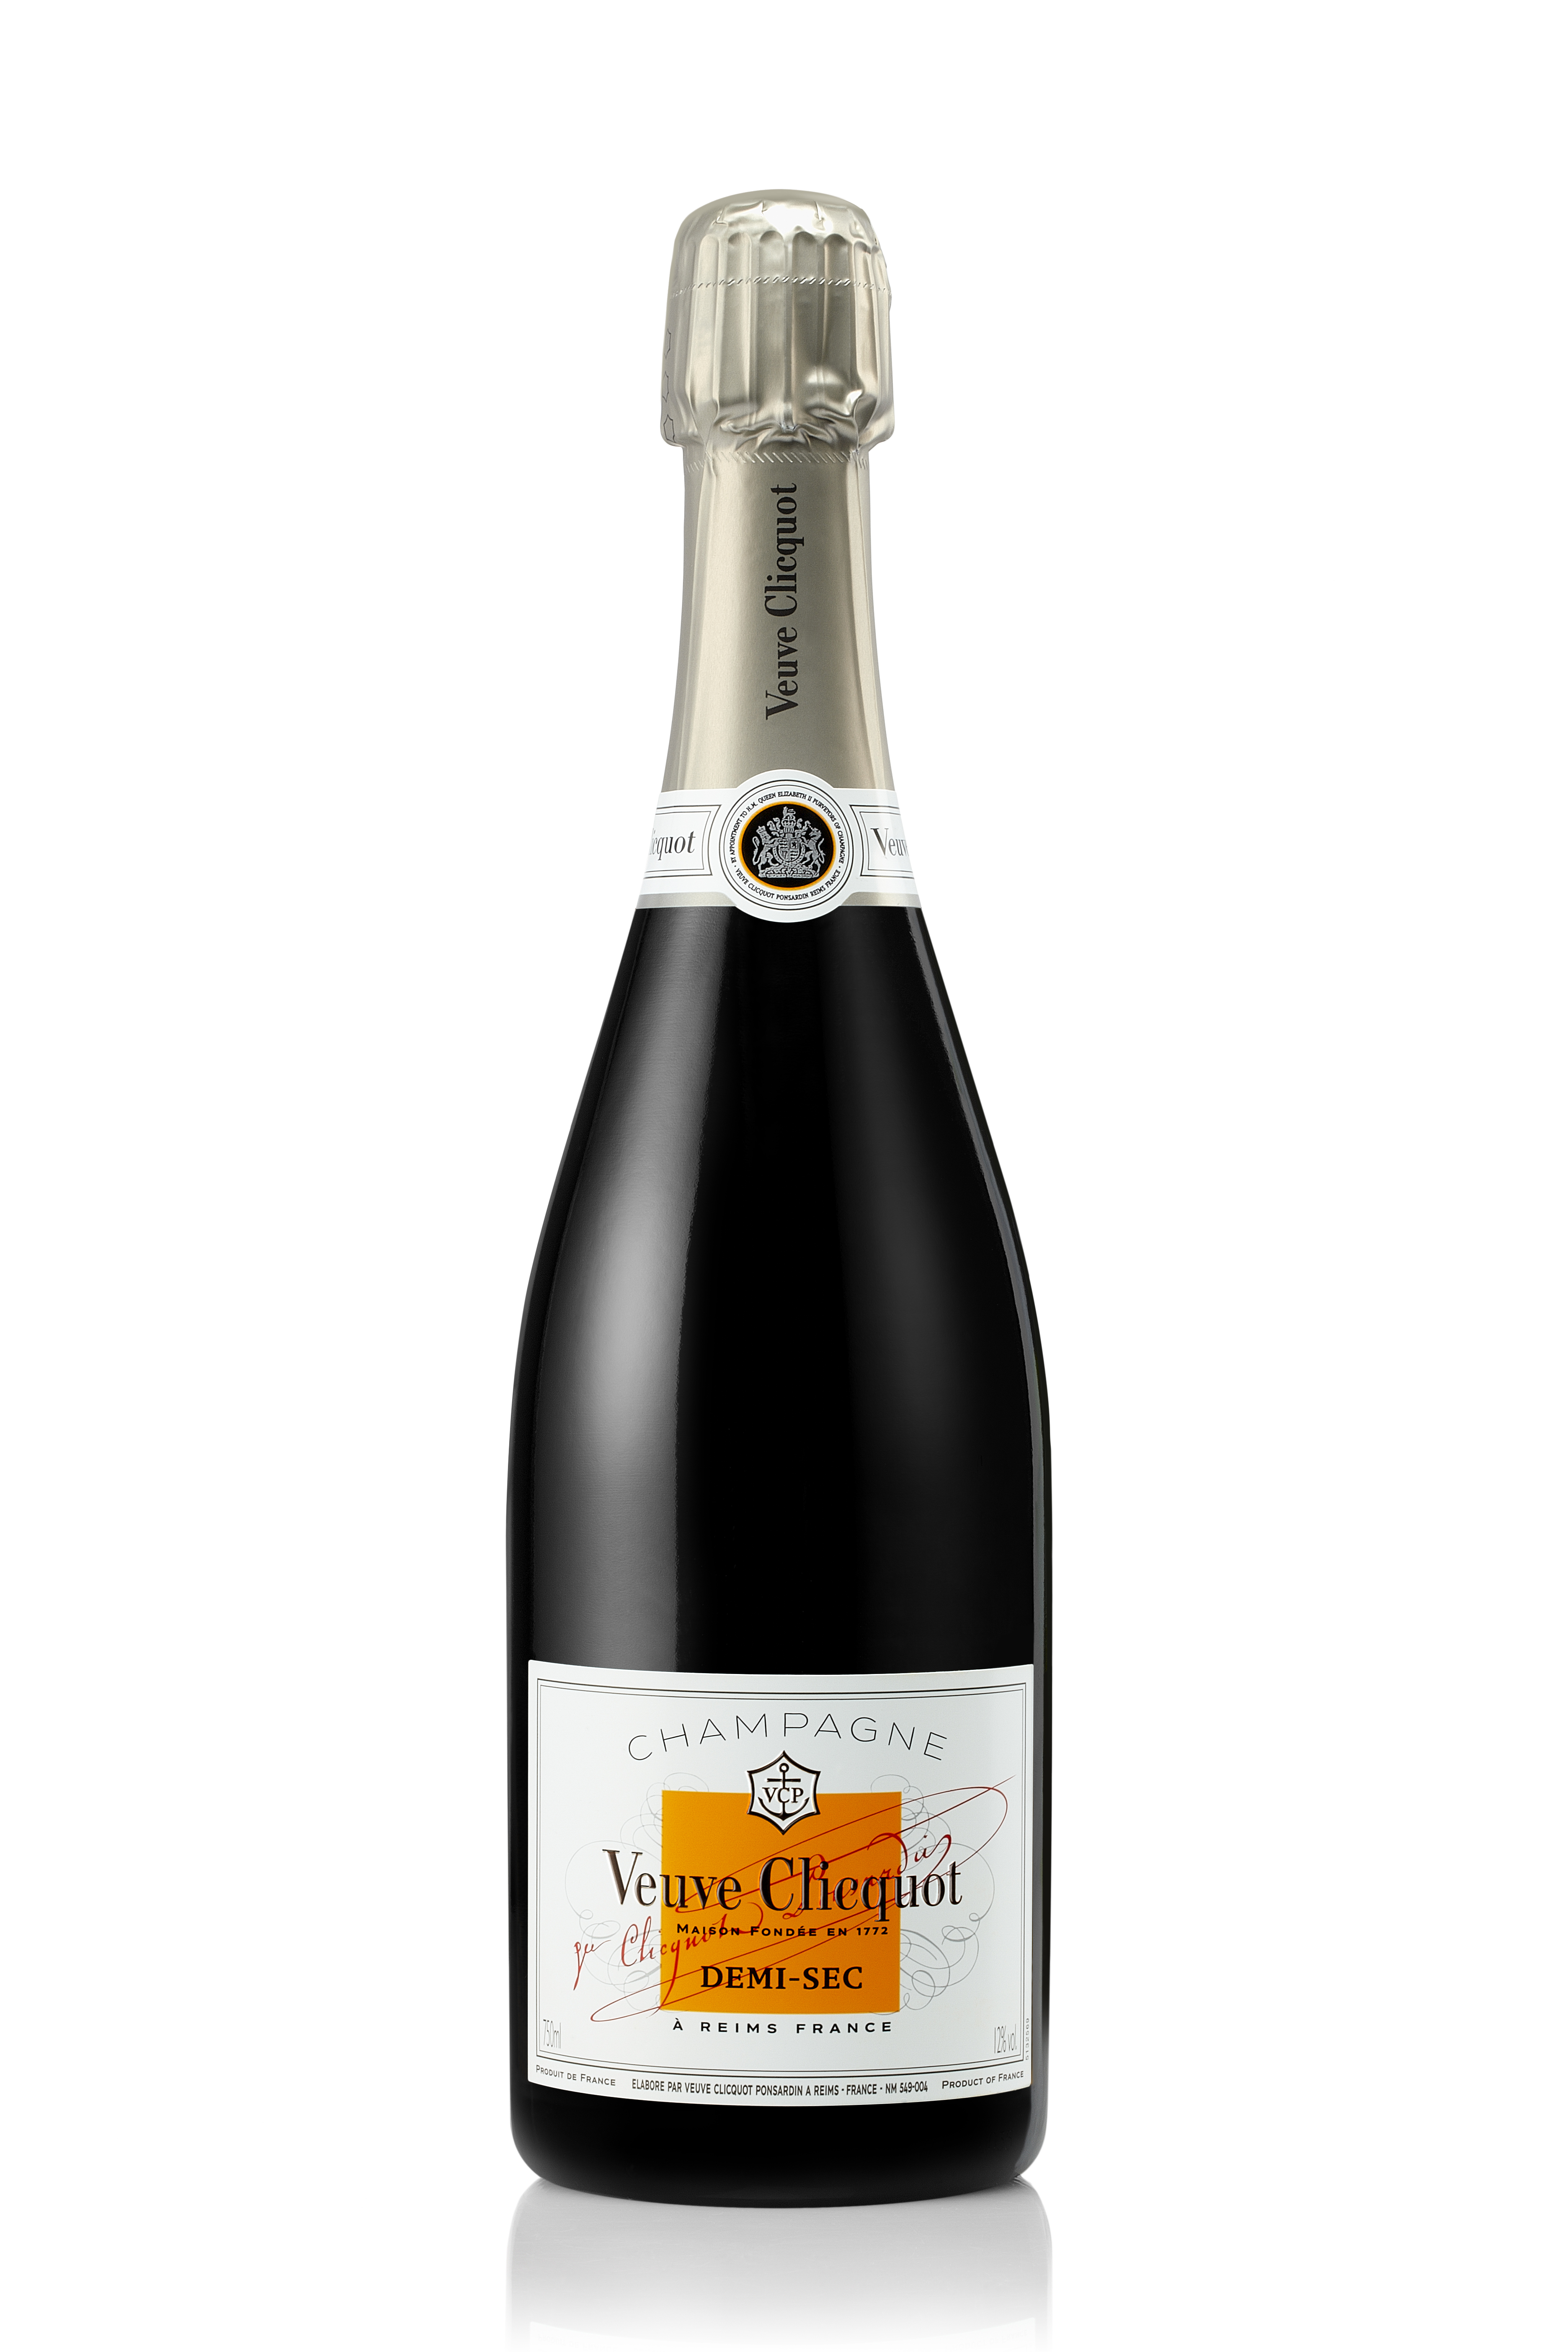 Veuve Clicquot Demi-Sec 75CL in gift packaging